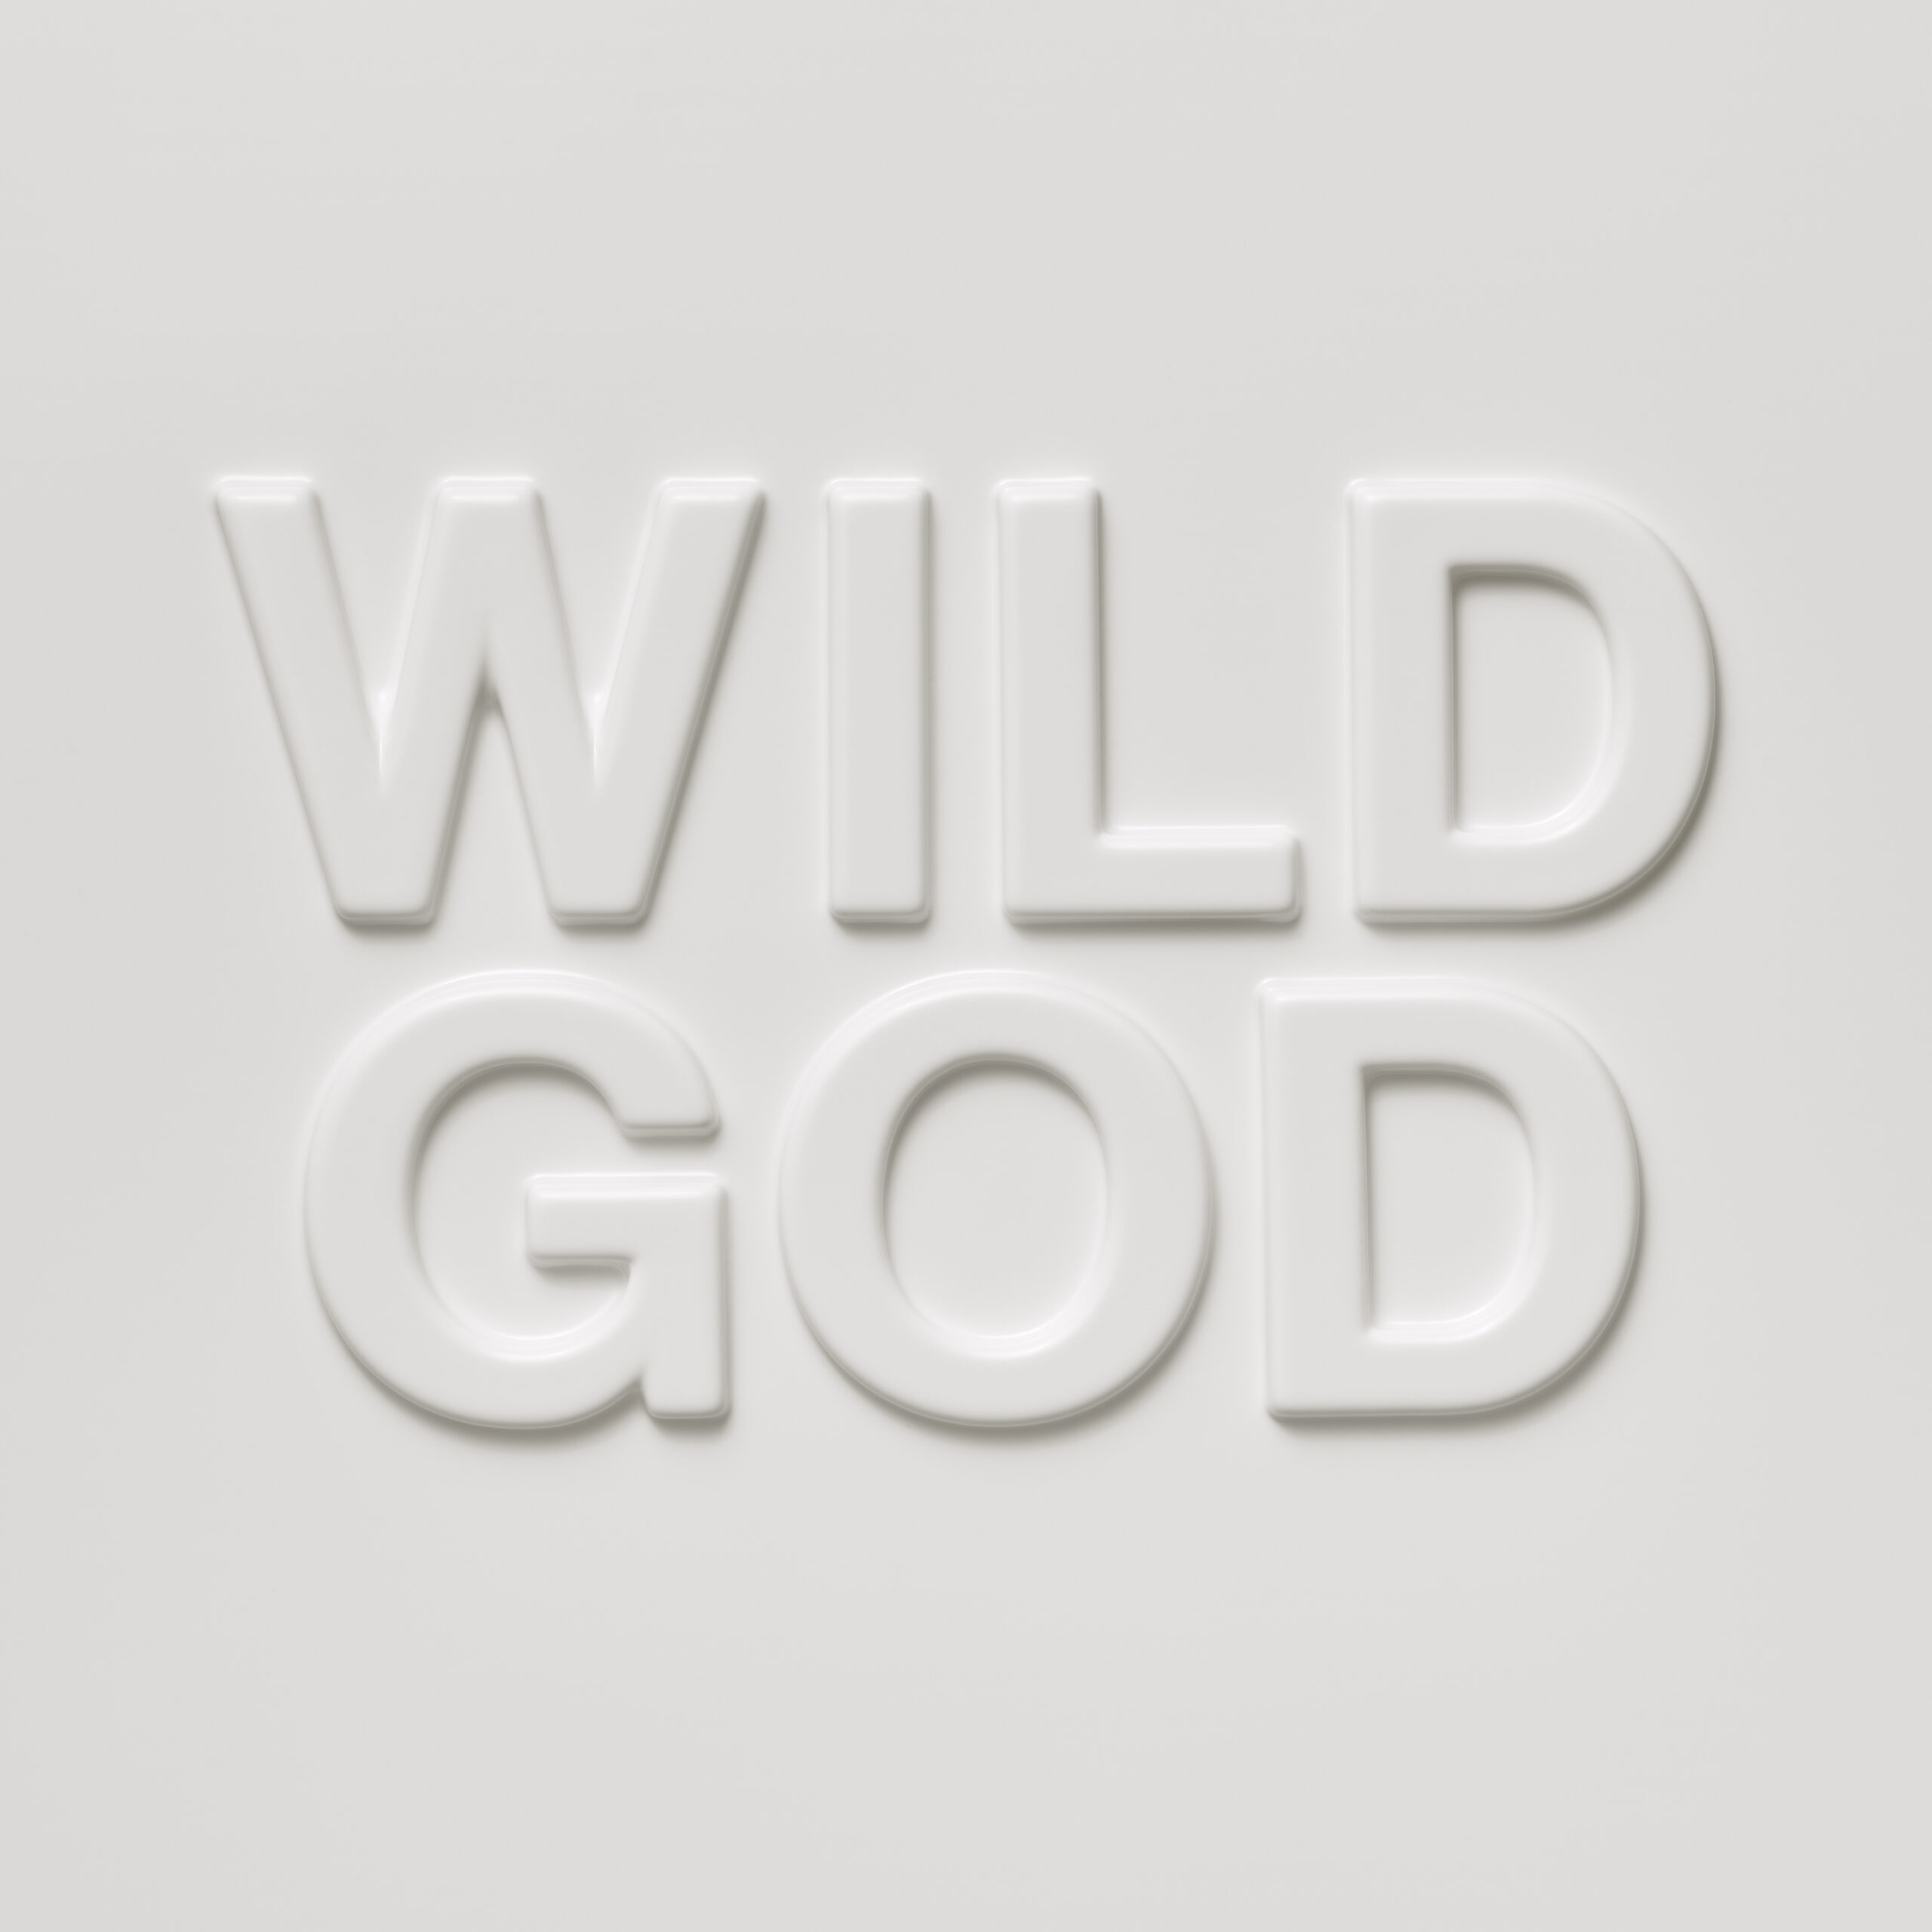 Nick Cave & The Bad Seeds announce new album ‘Wild God’